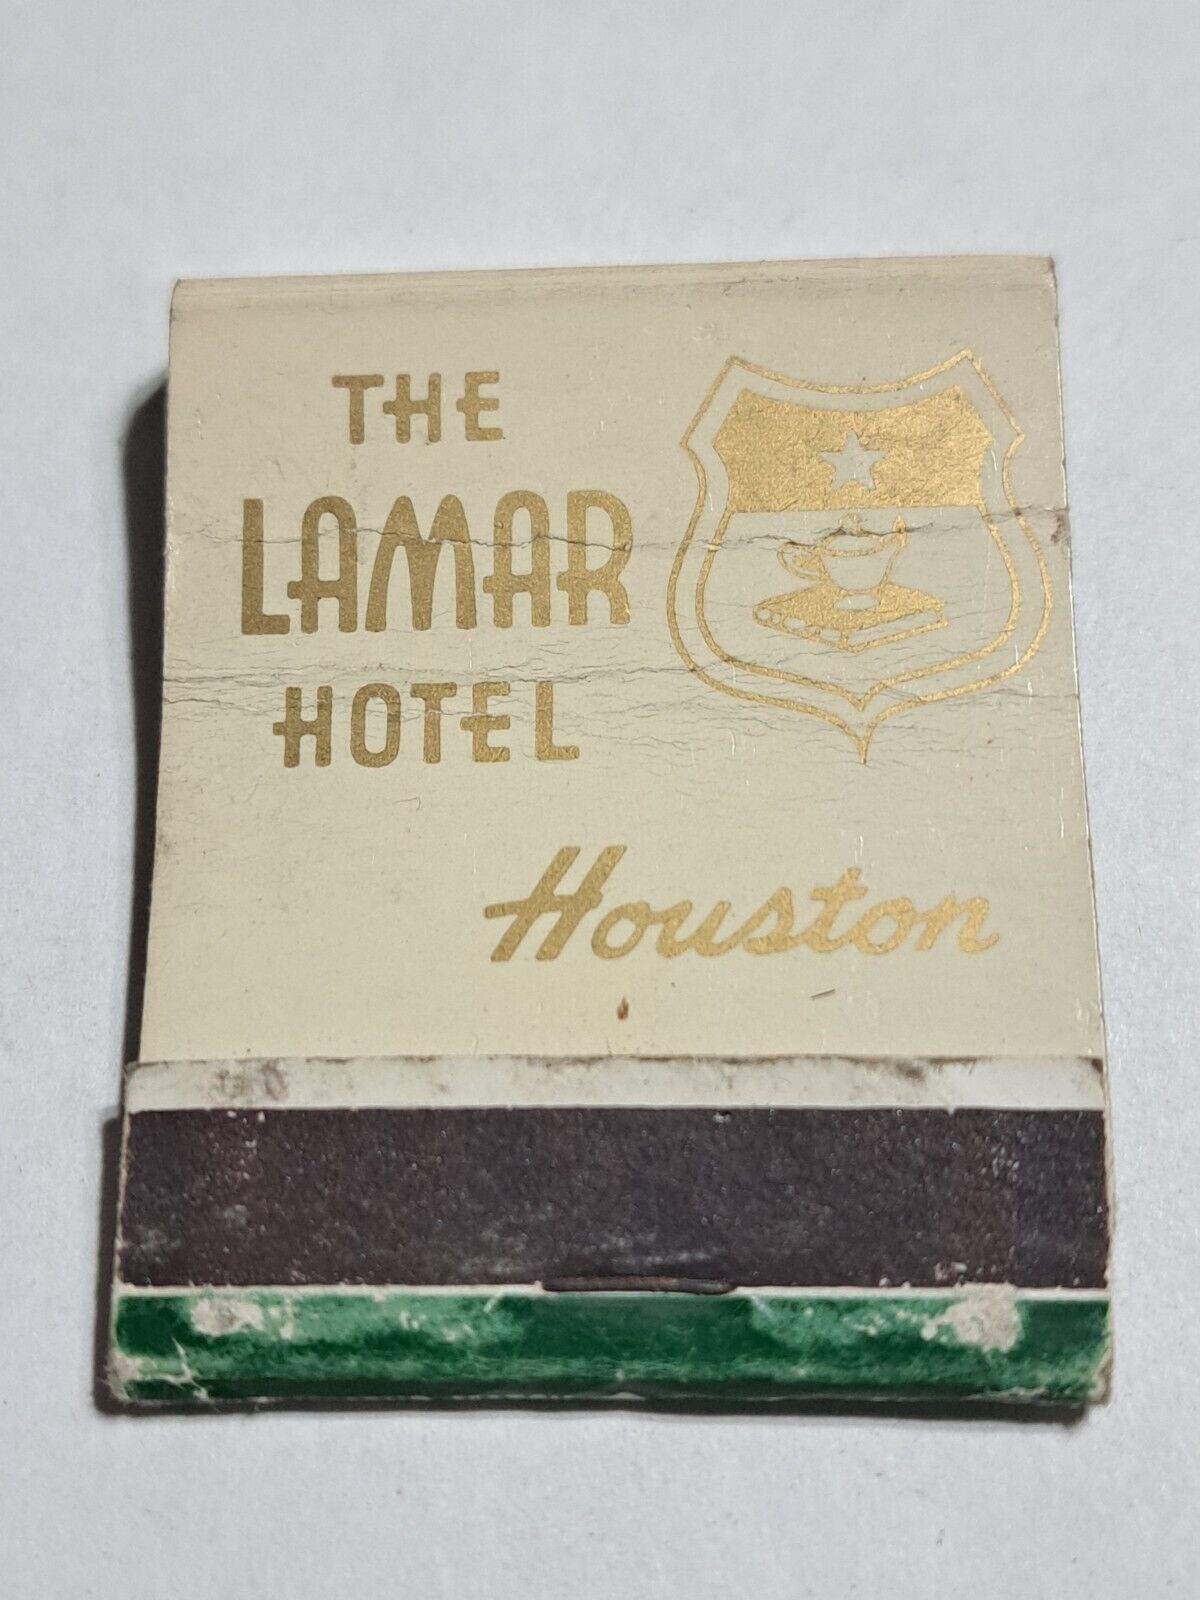 Vtg. The Lamar Hotel Houston Texas matchbook empty 